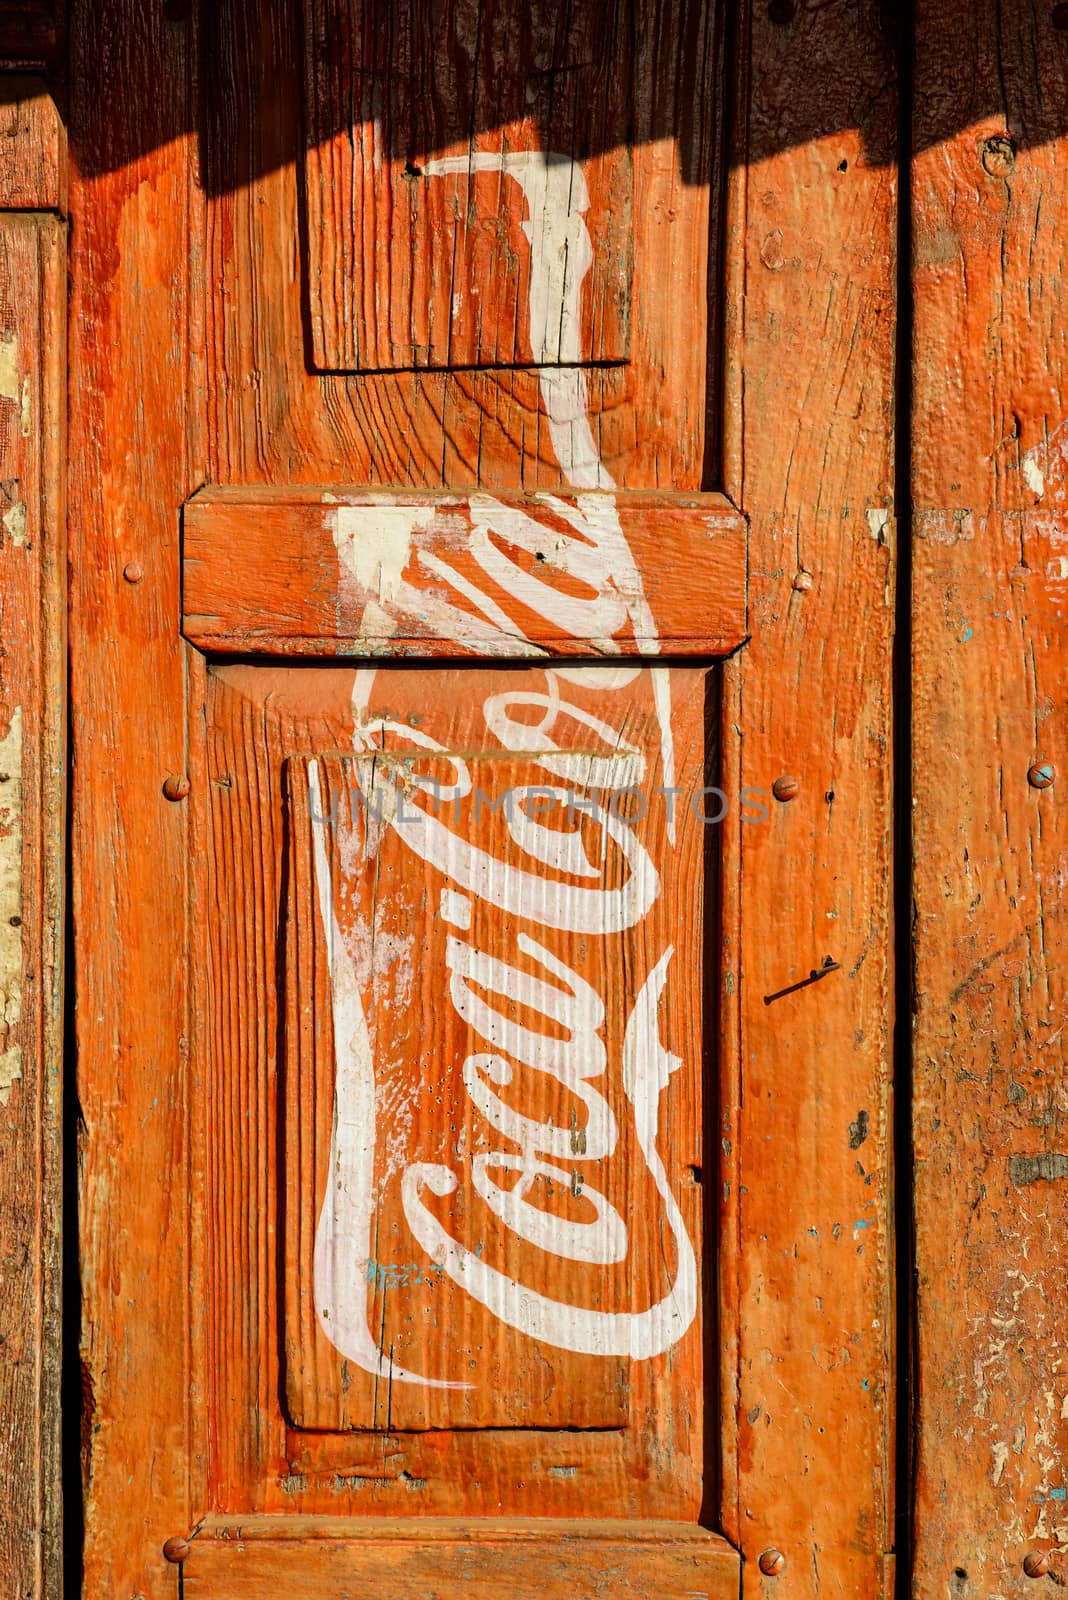 Coca-Cola advertisement by dutourdumonde